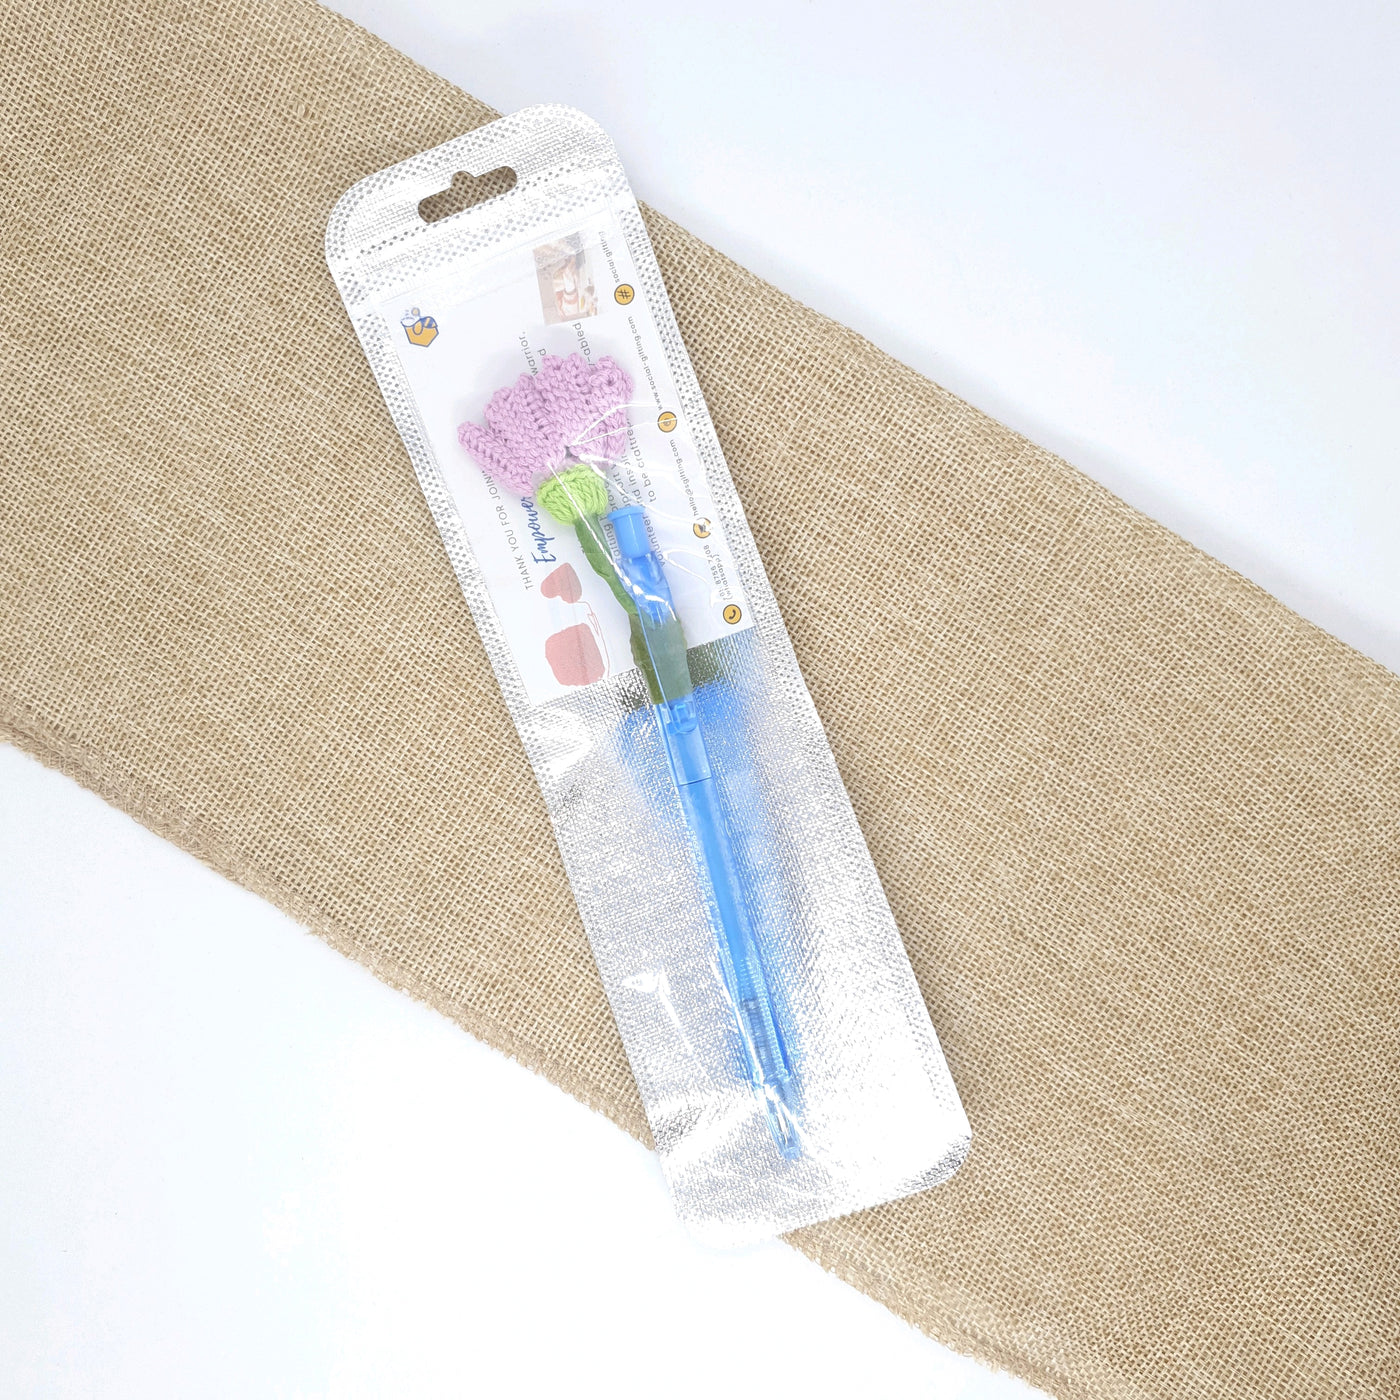 Mini Crocheted Flower with Pen